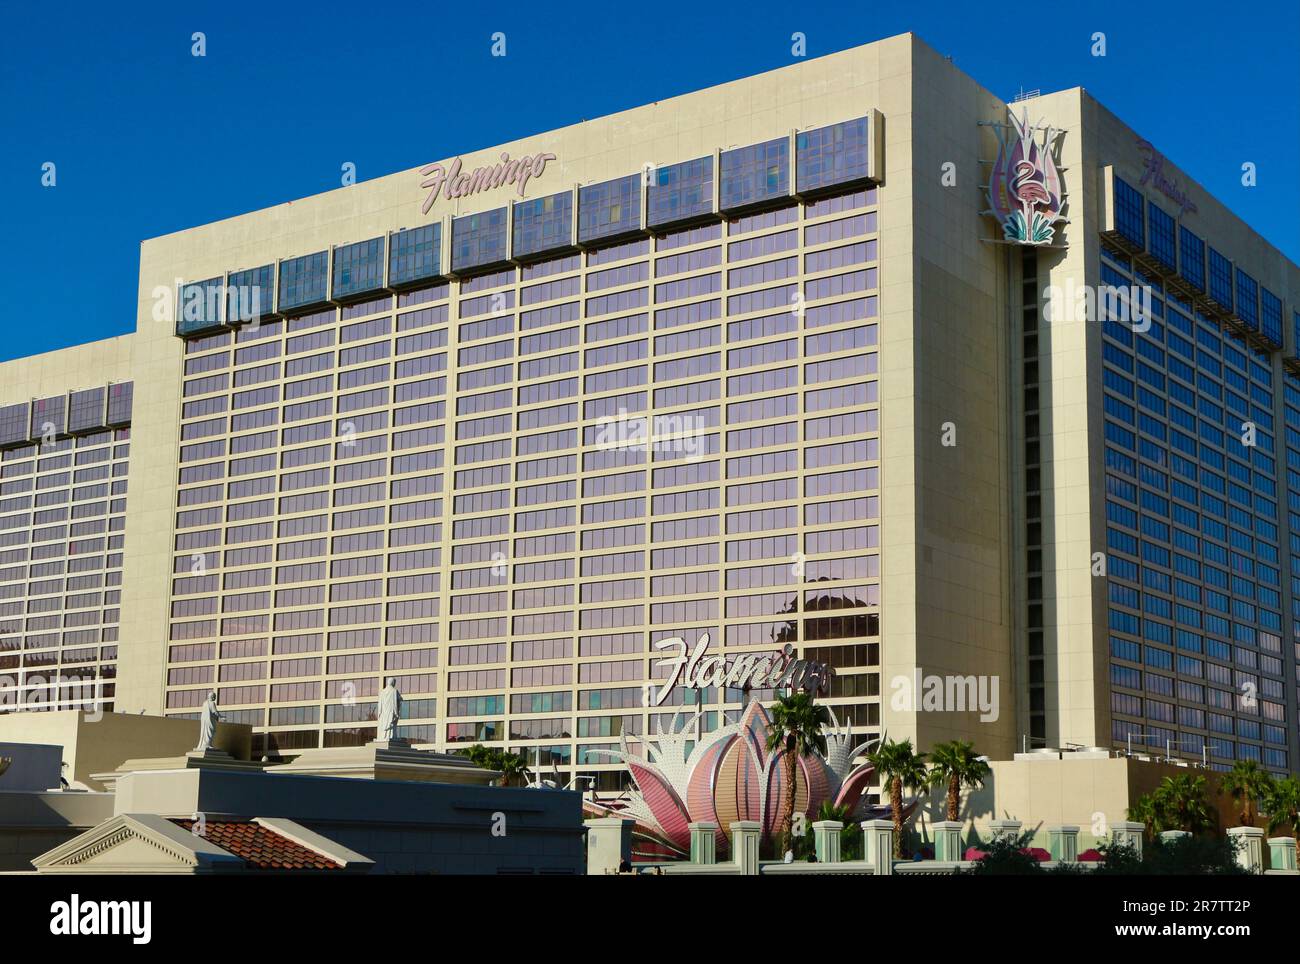 Hotel Flamingo Las Vegas e casinò Las Vegas Nevada USA Foto Stock